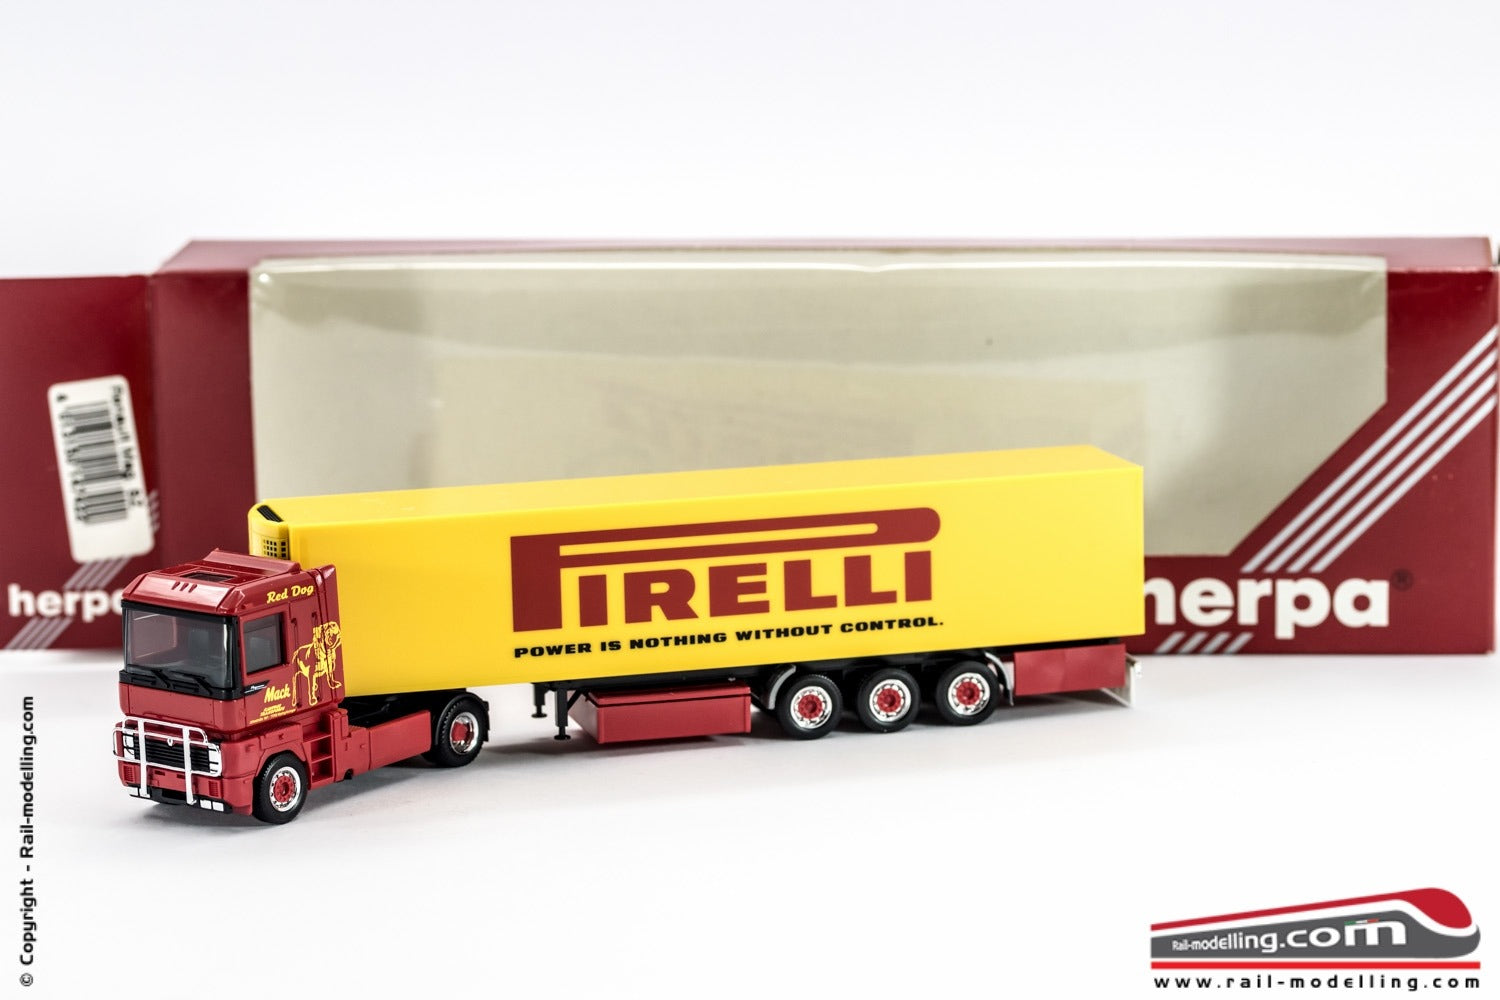 HERPA 147422 - H0 1:87 - Camion rimorchio Renault Magnum Red Dog con rimorchio Pirelli